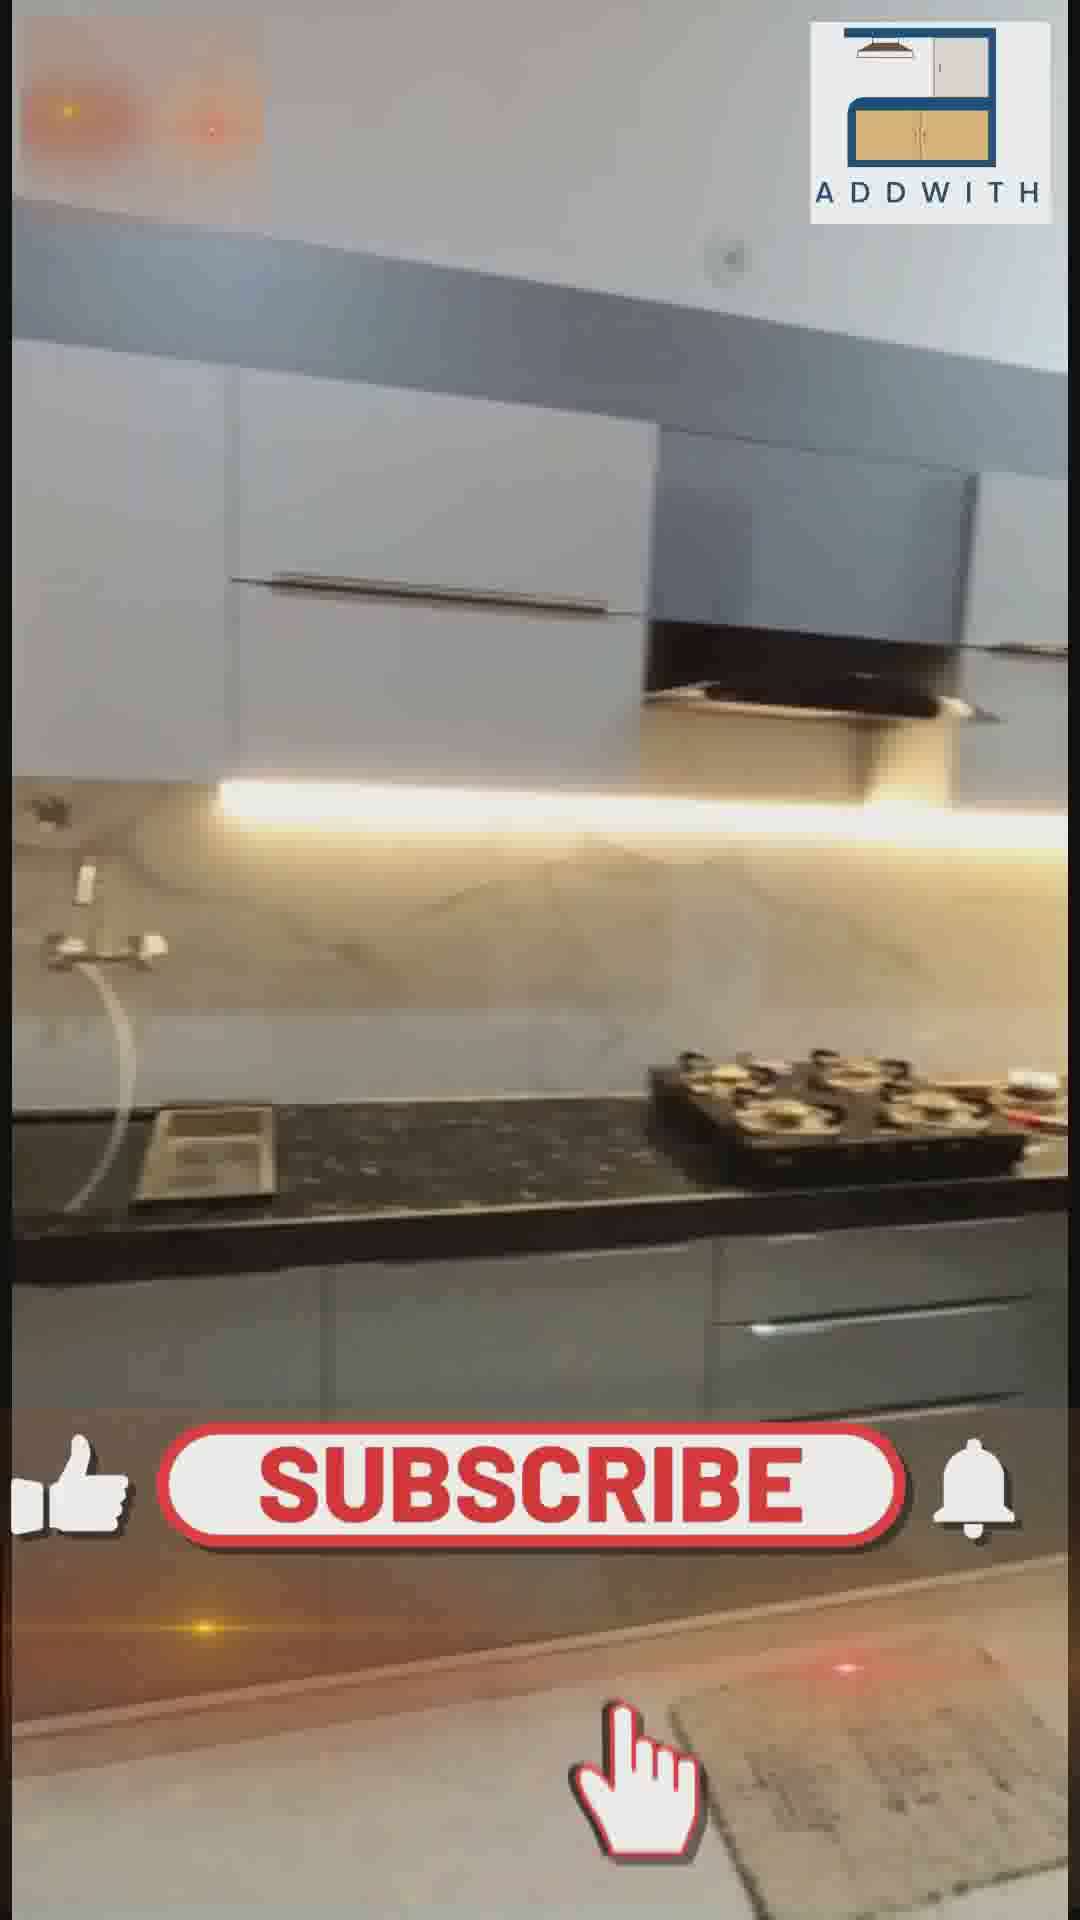 Modular kitchen in Jaipur
contact us for+917014960889  #ModularKitchen  #modularkitchendesign  #modularkitchen   #modularkitchenearme  #modularwardobes  #Modularfurniture  #modularkitchenworks  #modularTvunits  #ModularKitchens  #ModularFurnitures  #GraniteFloors #Flooring  #FlooringTiles  #KitchenIdeas #LShapeKitchen #KitchenInterior #LargeKitchen #wadrobedesign #chimneys #hobs  #KitchenIdeas #KitchenTiles #KitchenRenovation